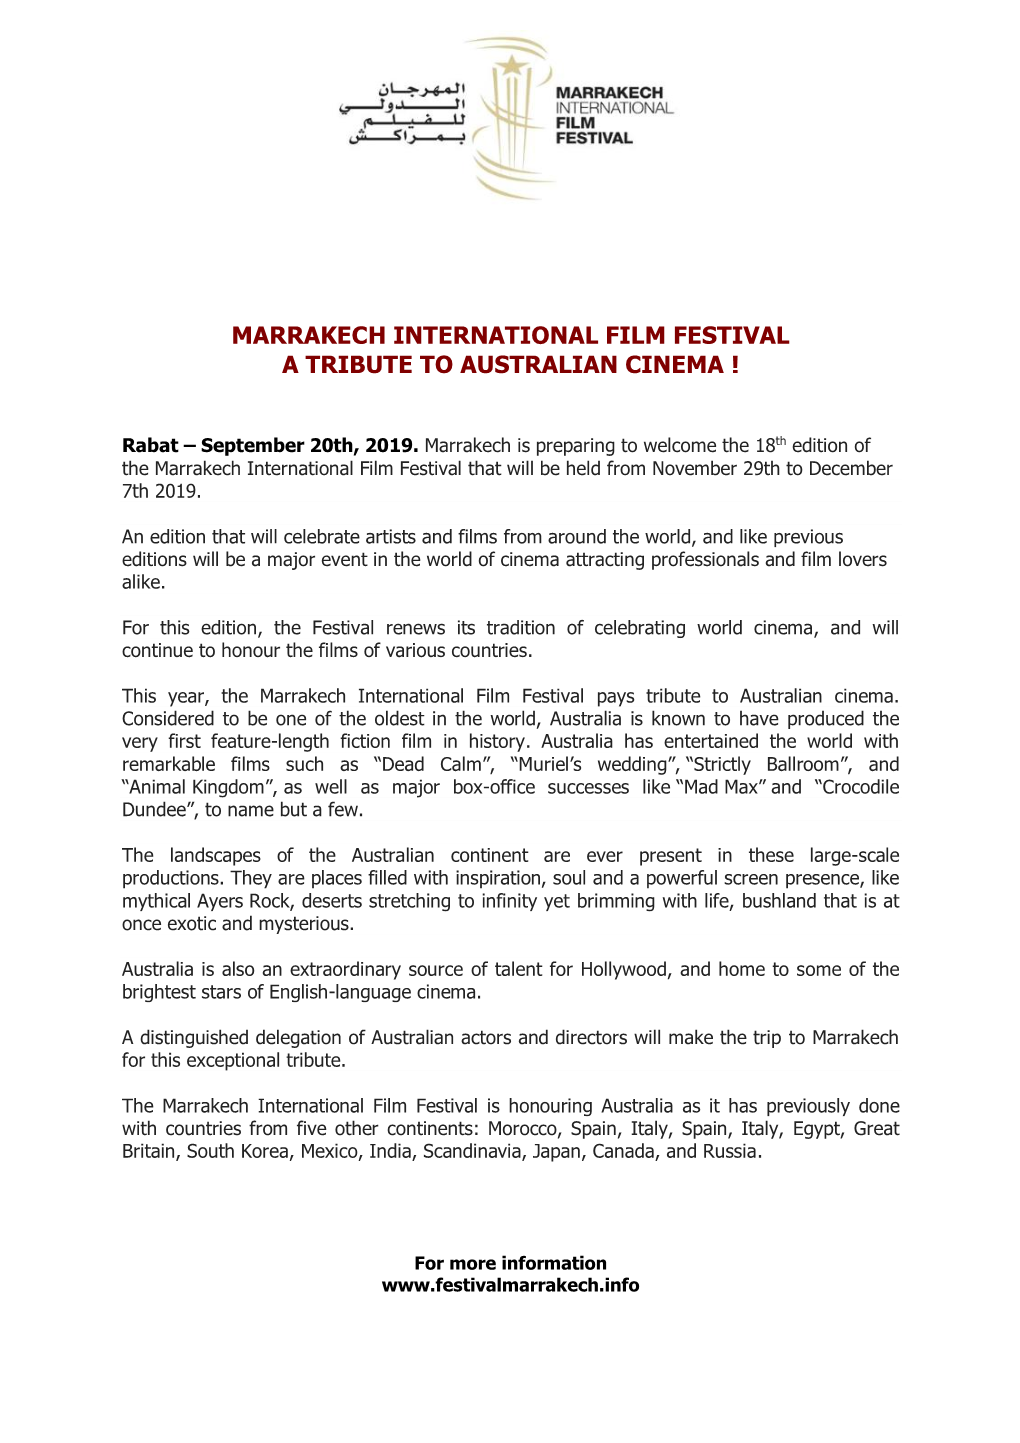 Marrakech International Film Festival a Tribute to Australian Cinema !